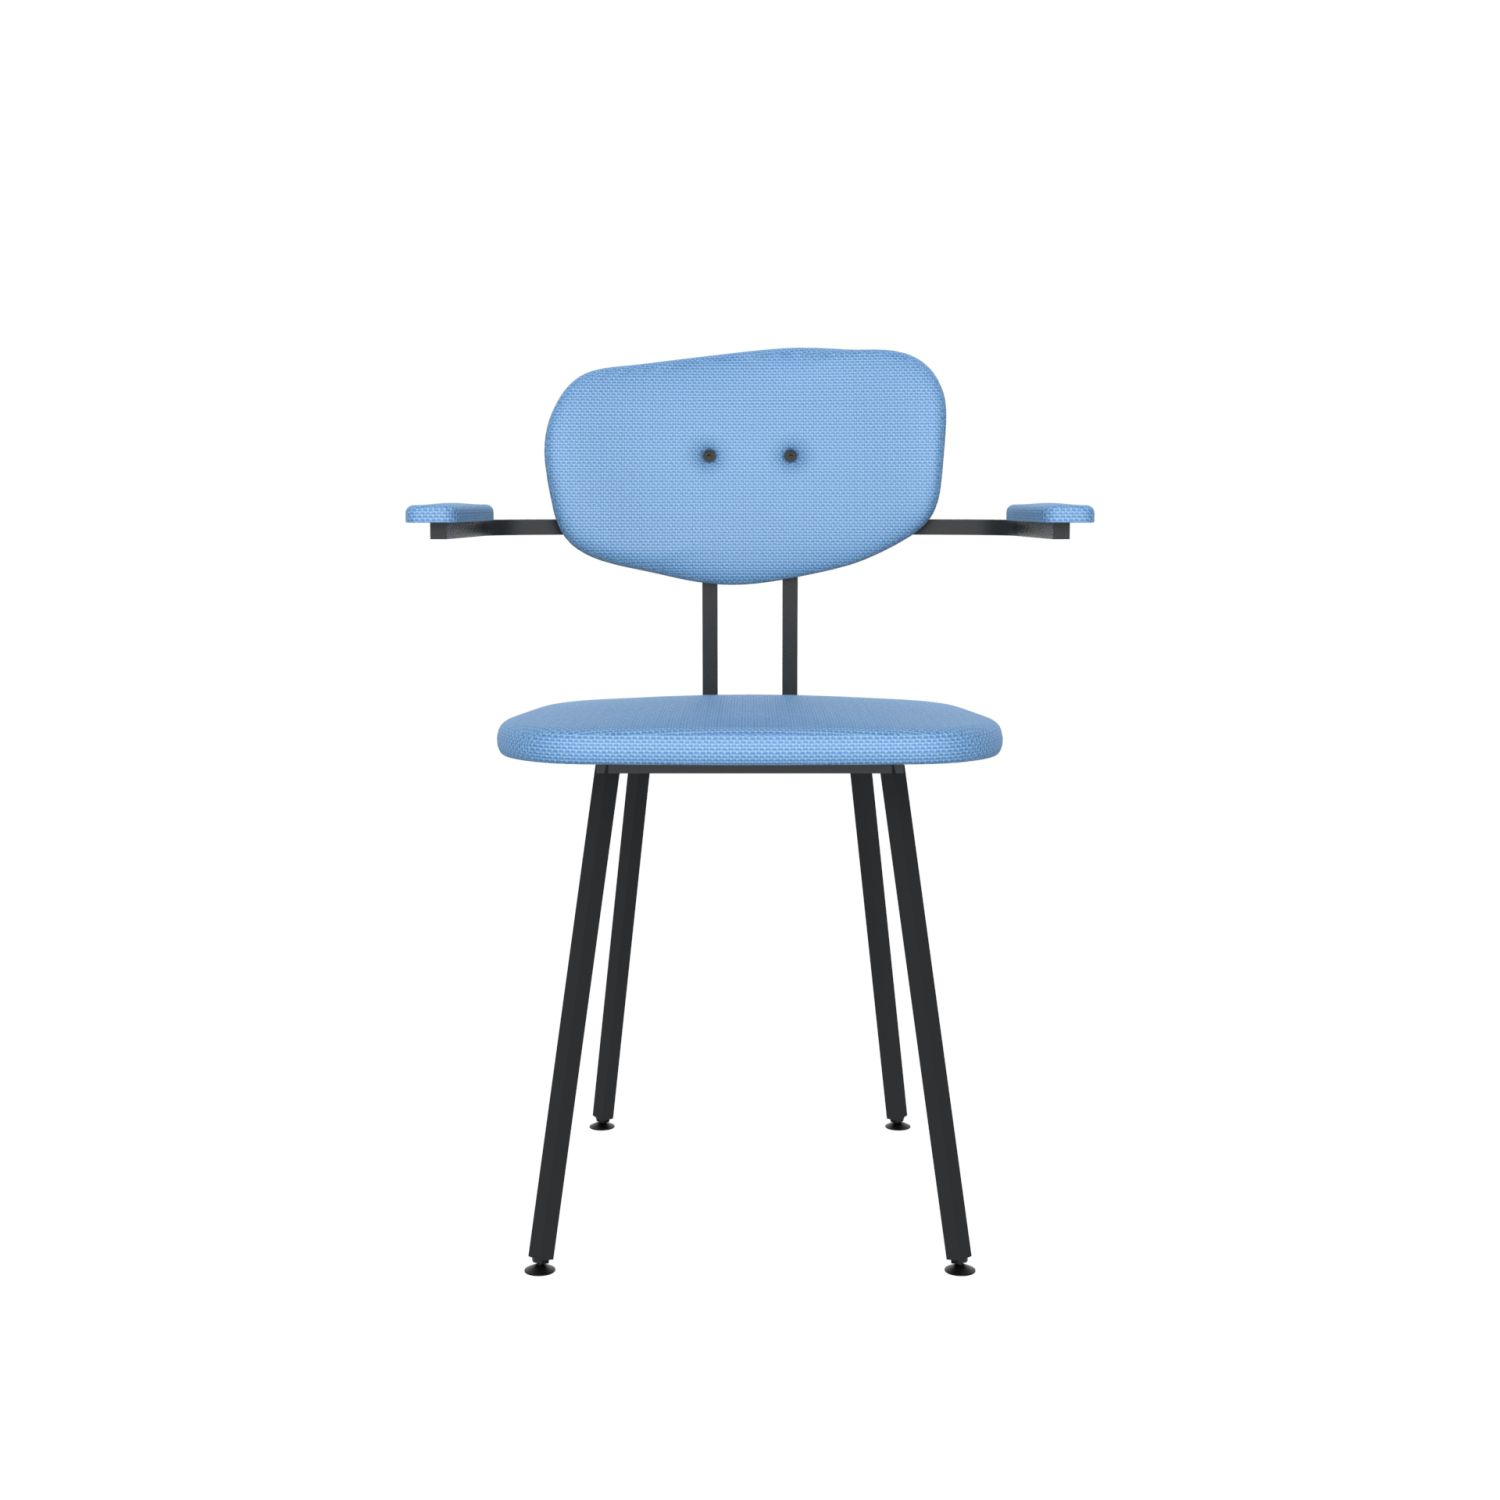 lensvelt maarten baas chair 102 not stackable with armrests backrest c blue horizon 040 black ral9005 hard leg ends